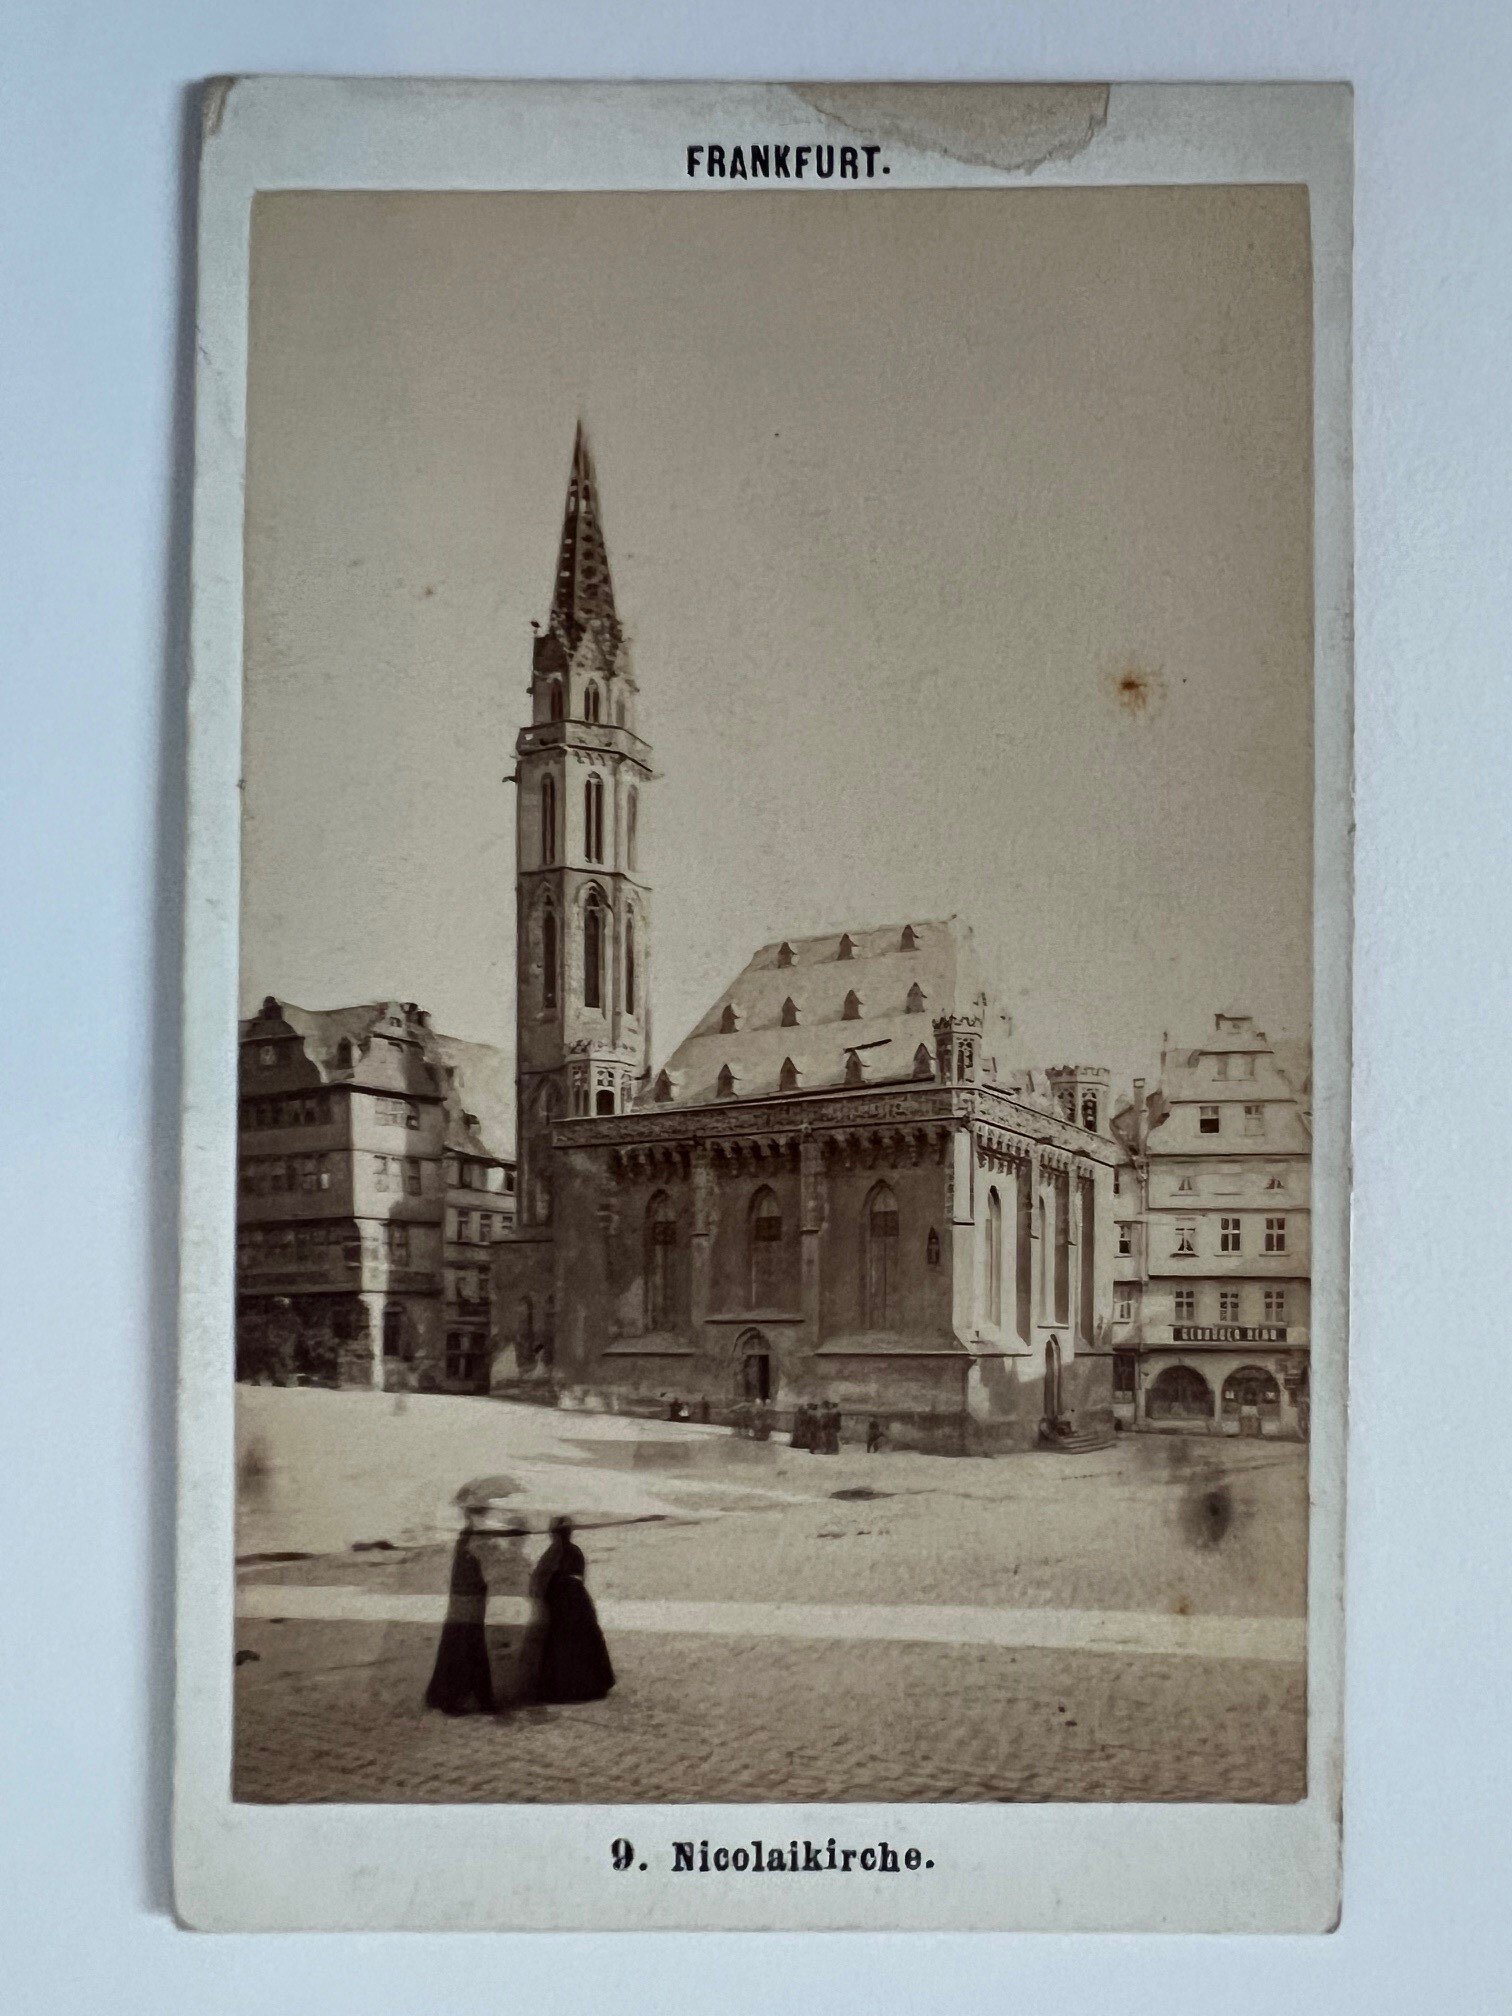 CdV, Frantisek Fridrich, Frankfurt, Nr. 9, Nicolaikirche, ca. 1875. (Taunus-Rhein-Main - Regionalgeschichtliche Sammlung Dr. Stefan Naas CC BY-NC-SA)